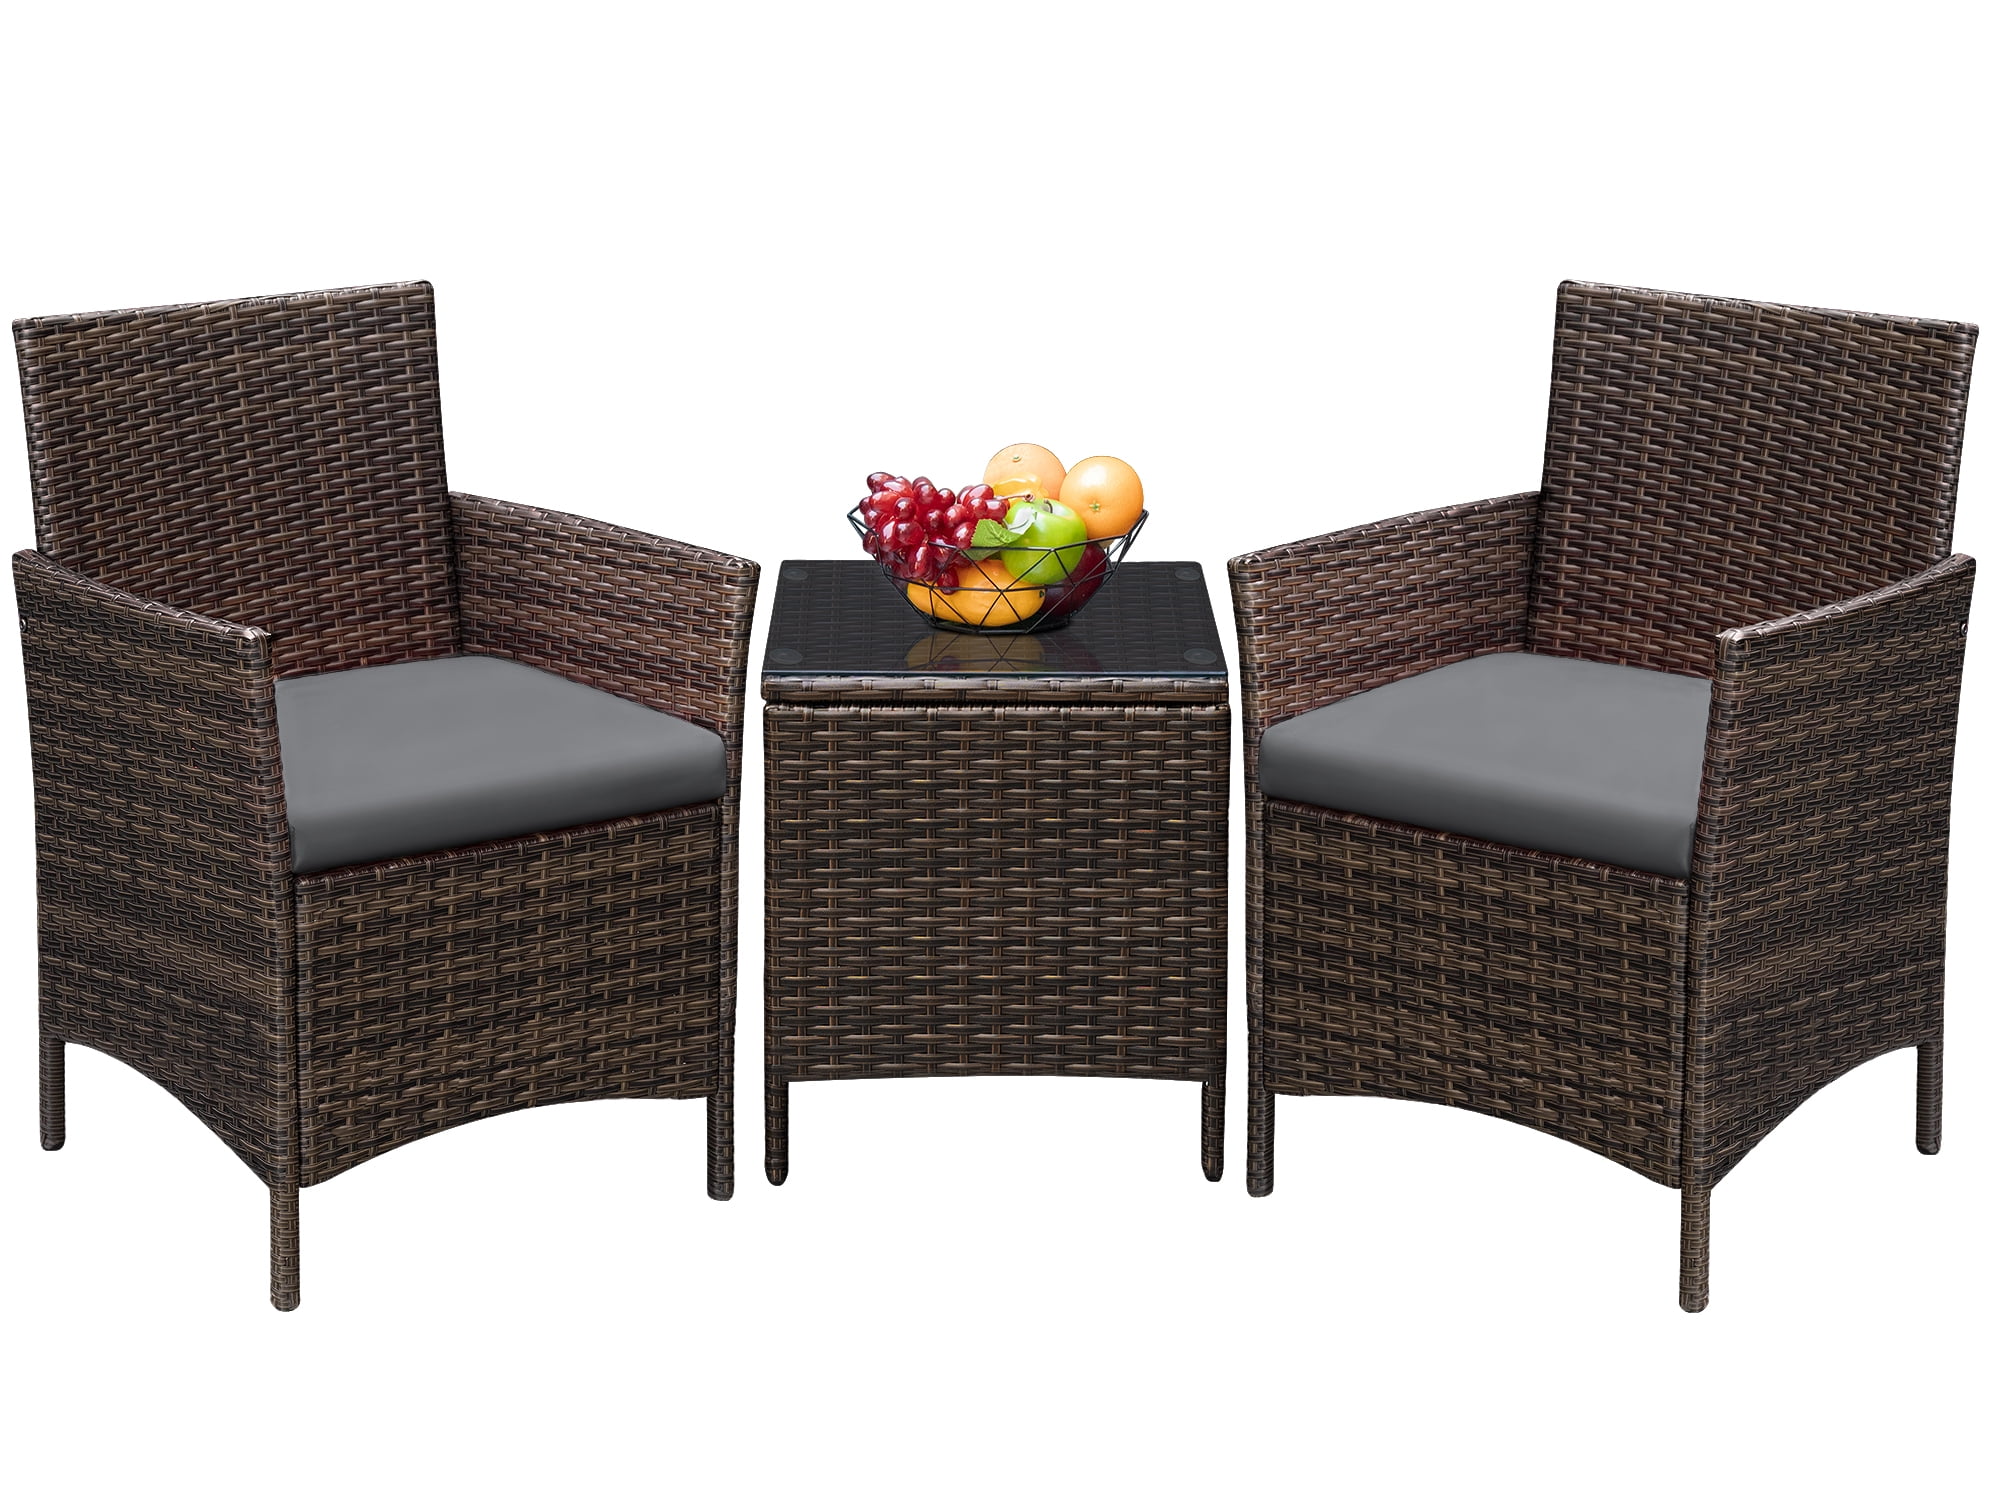 Devoko 3 Pieces Patio Conversation Set PE Rattan Wicker Chairs Outdoor Furniture Set, Brown/Gray